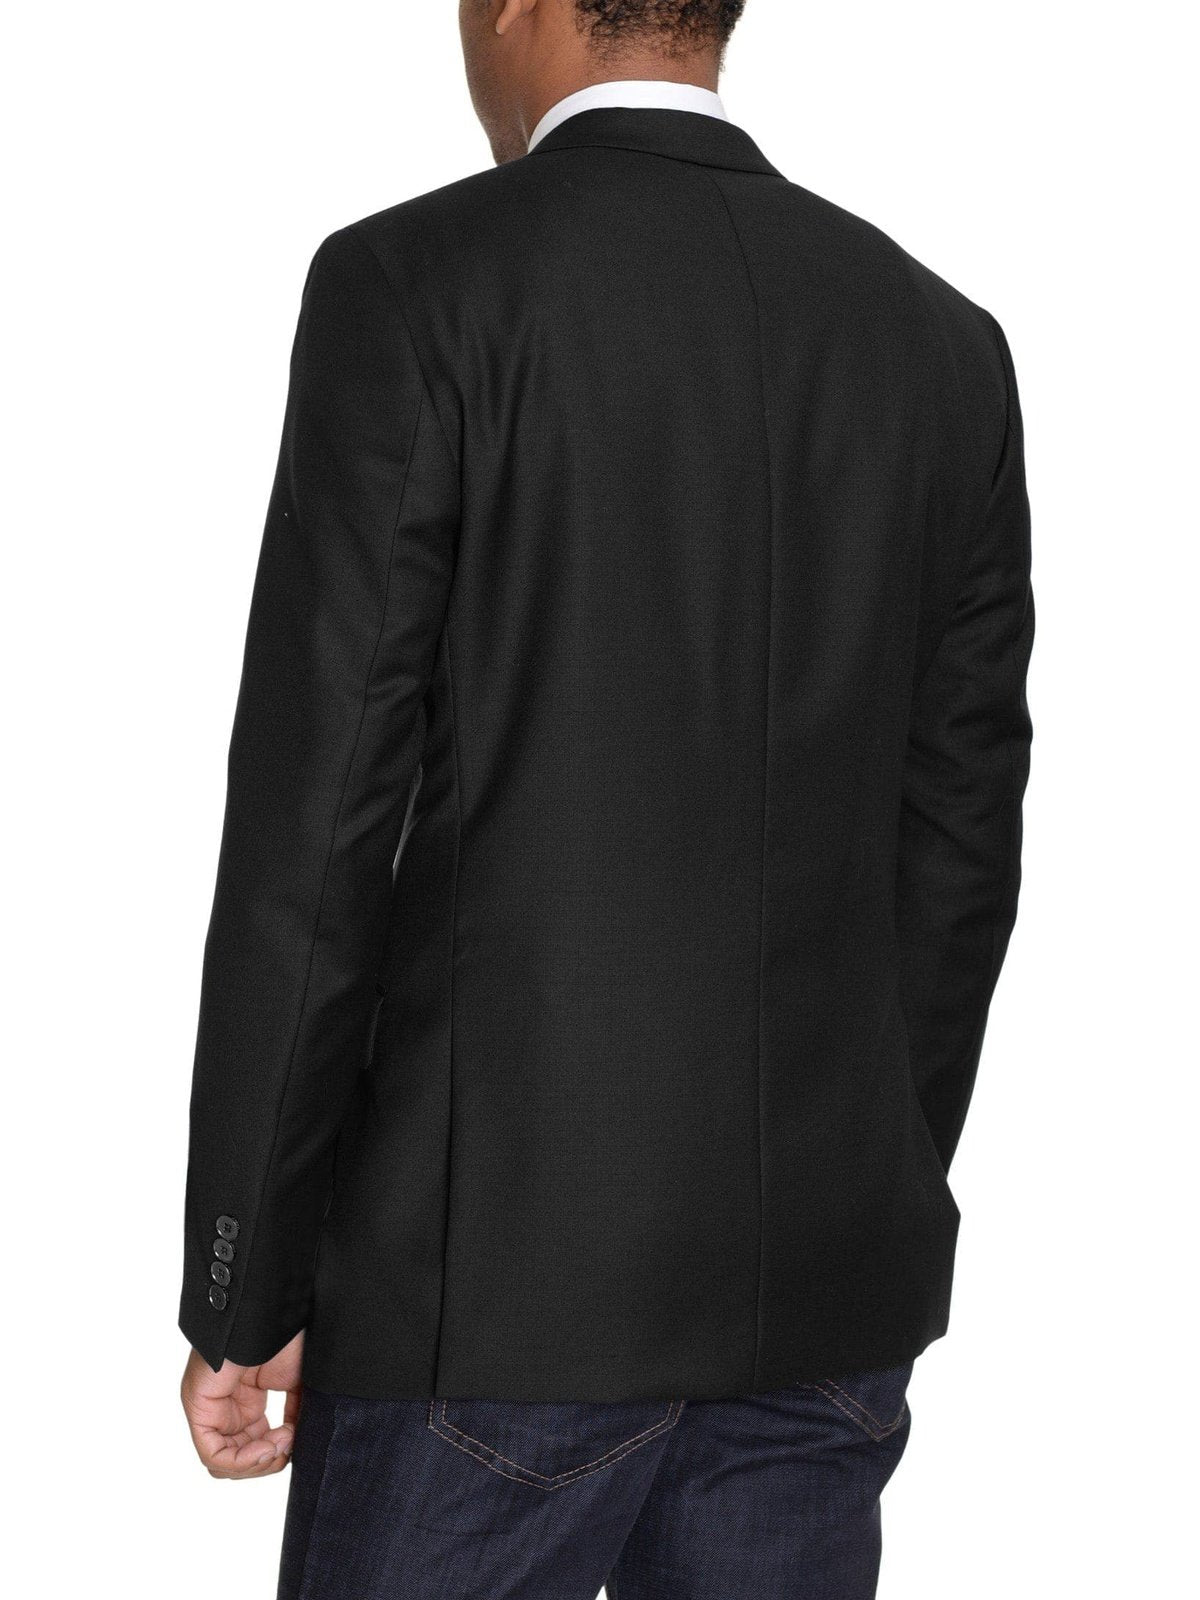 DKNY BLAZERS DKNY Regular Fit Black Two Button Wool Blend Stretch Blazer With Ticket Pocket